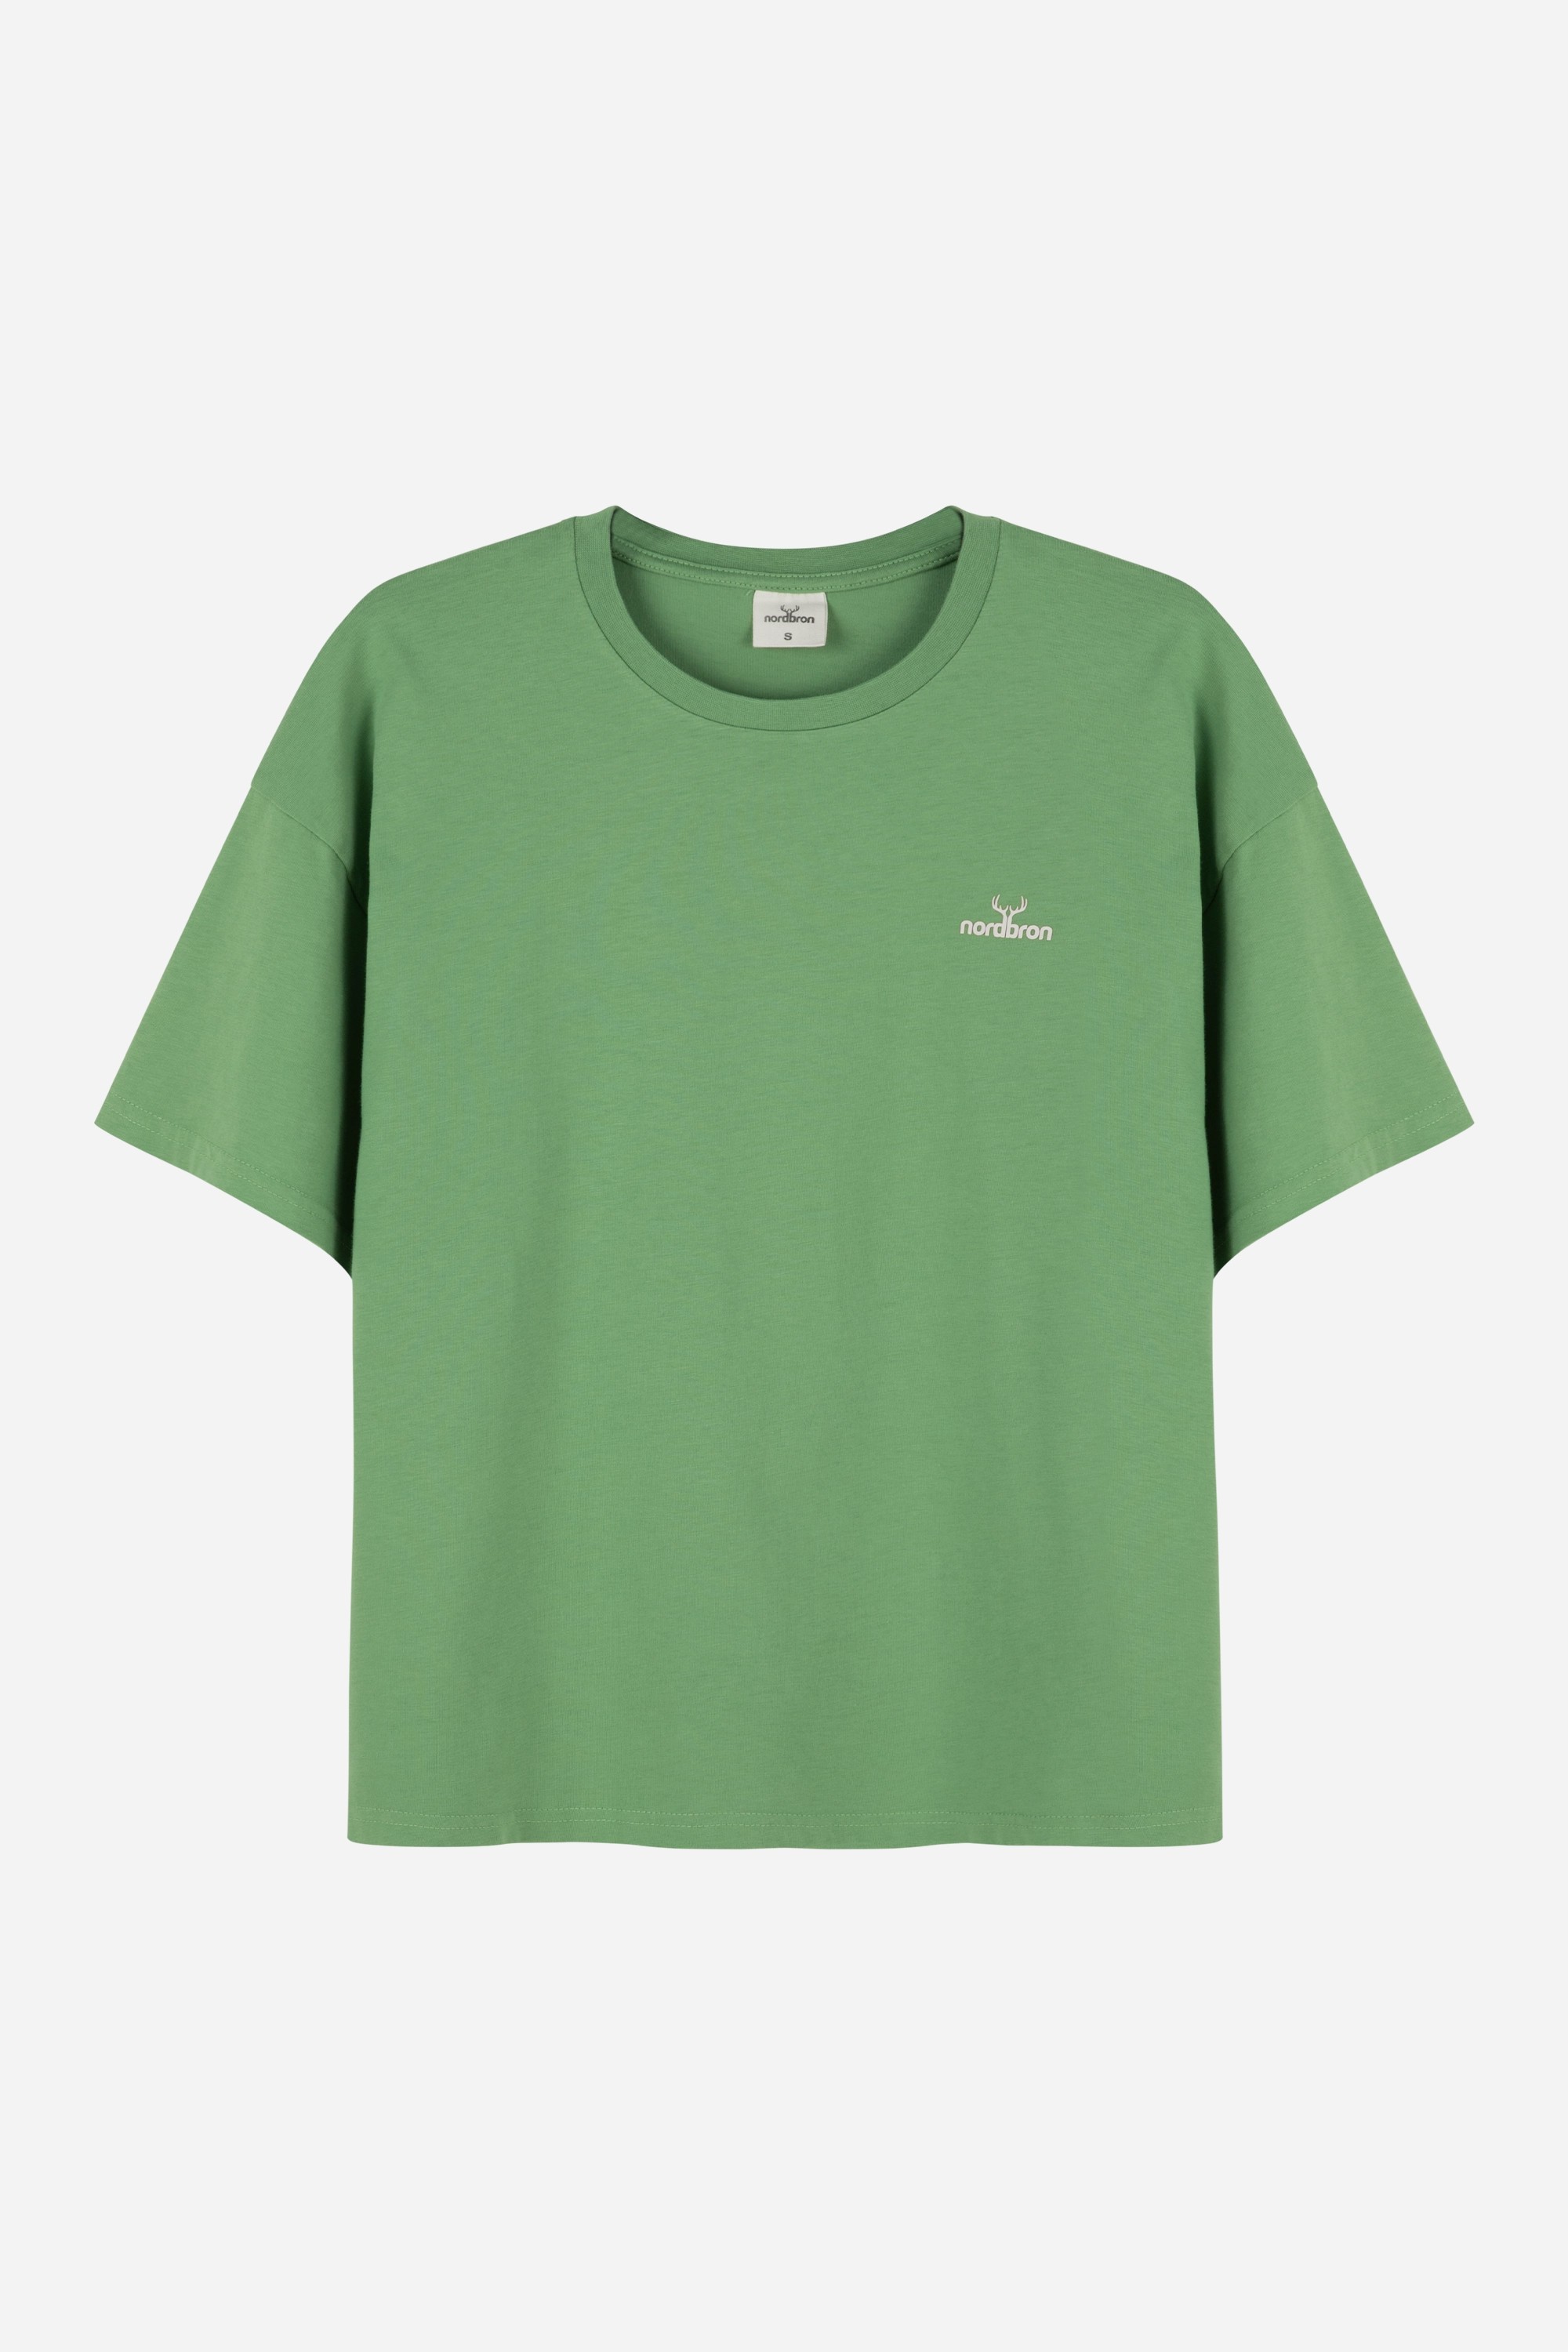 Kramer Nordbron Oversize T-shirt - Light Green